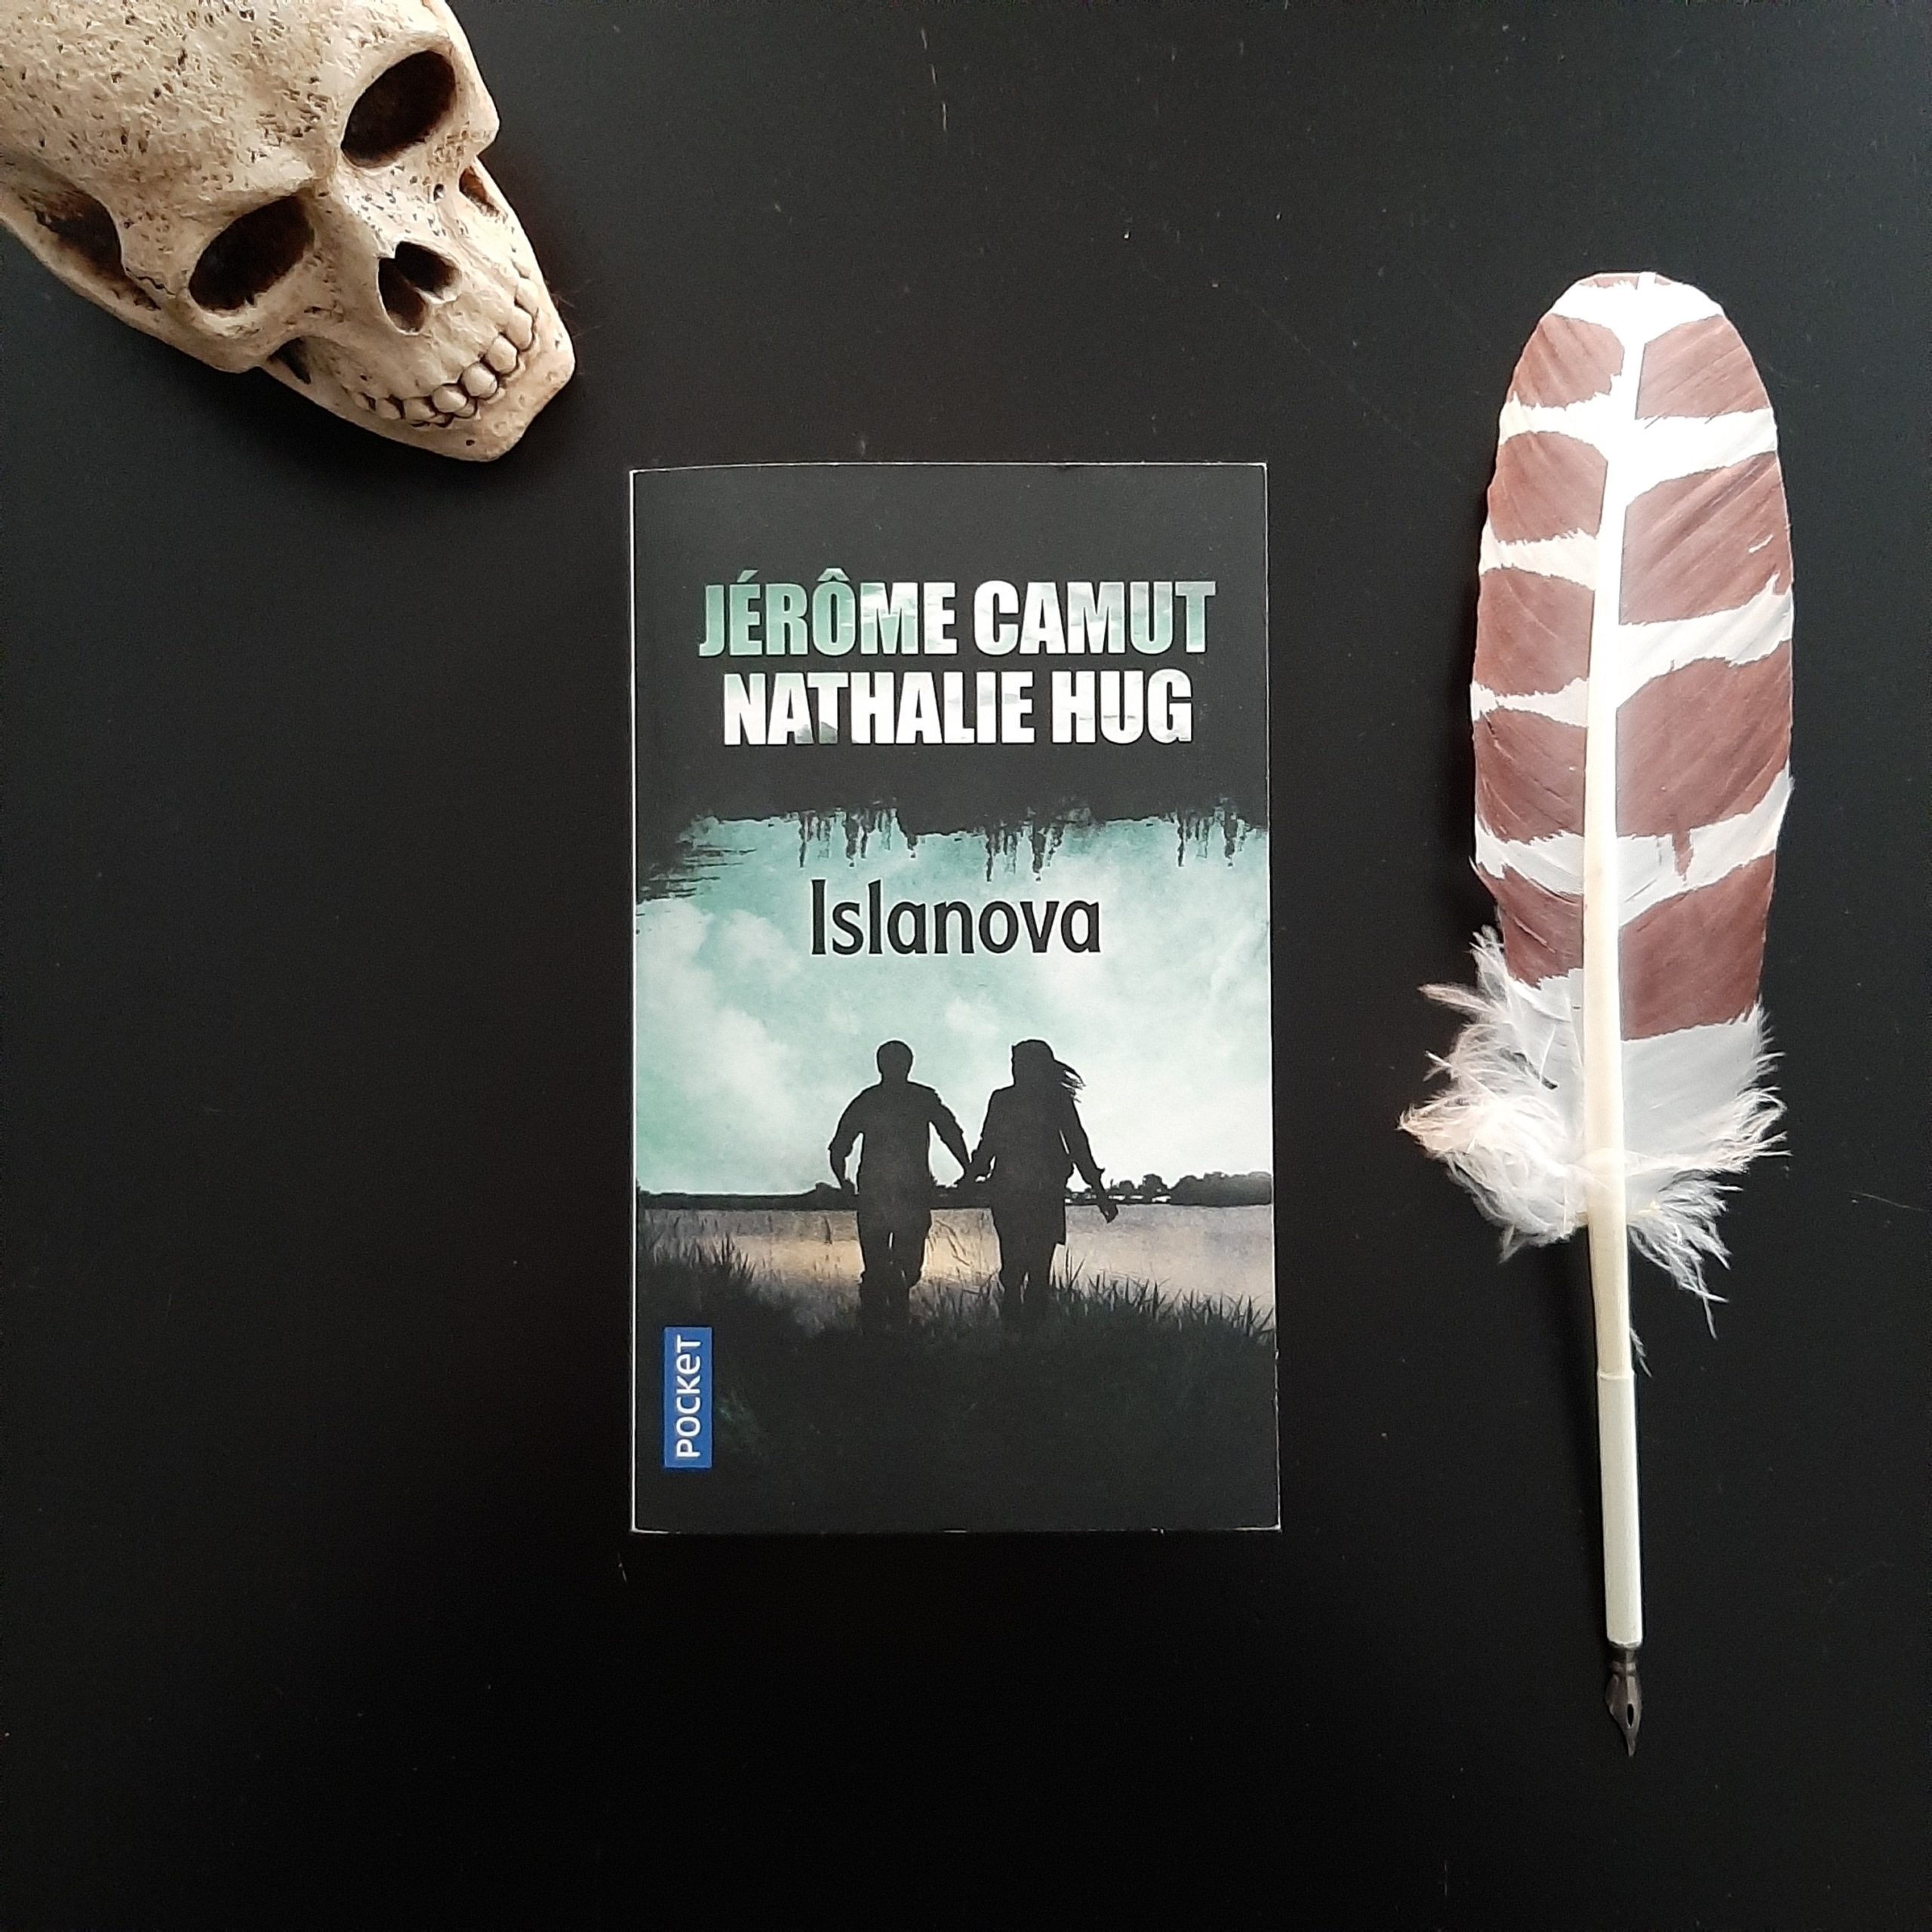 Islanova de Jérôme Camut et Nathalie Hug